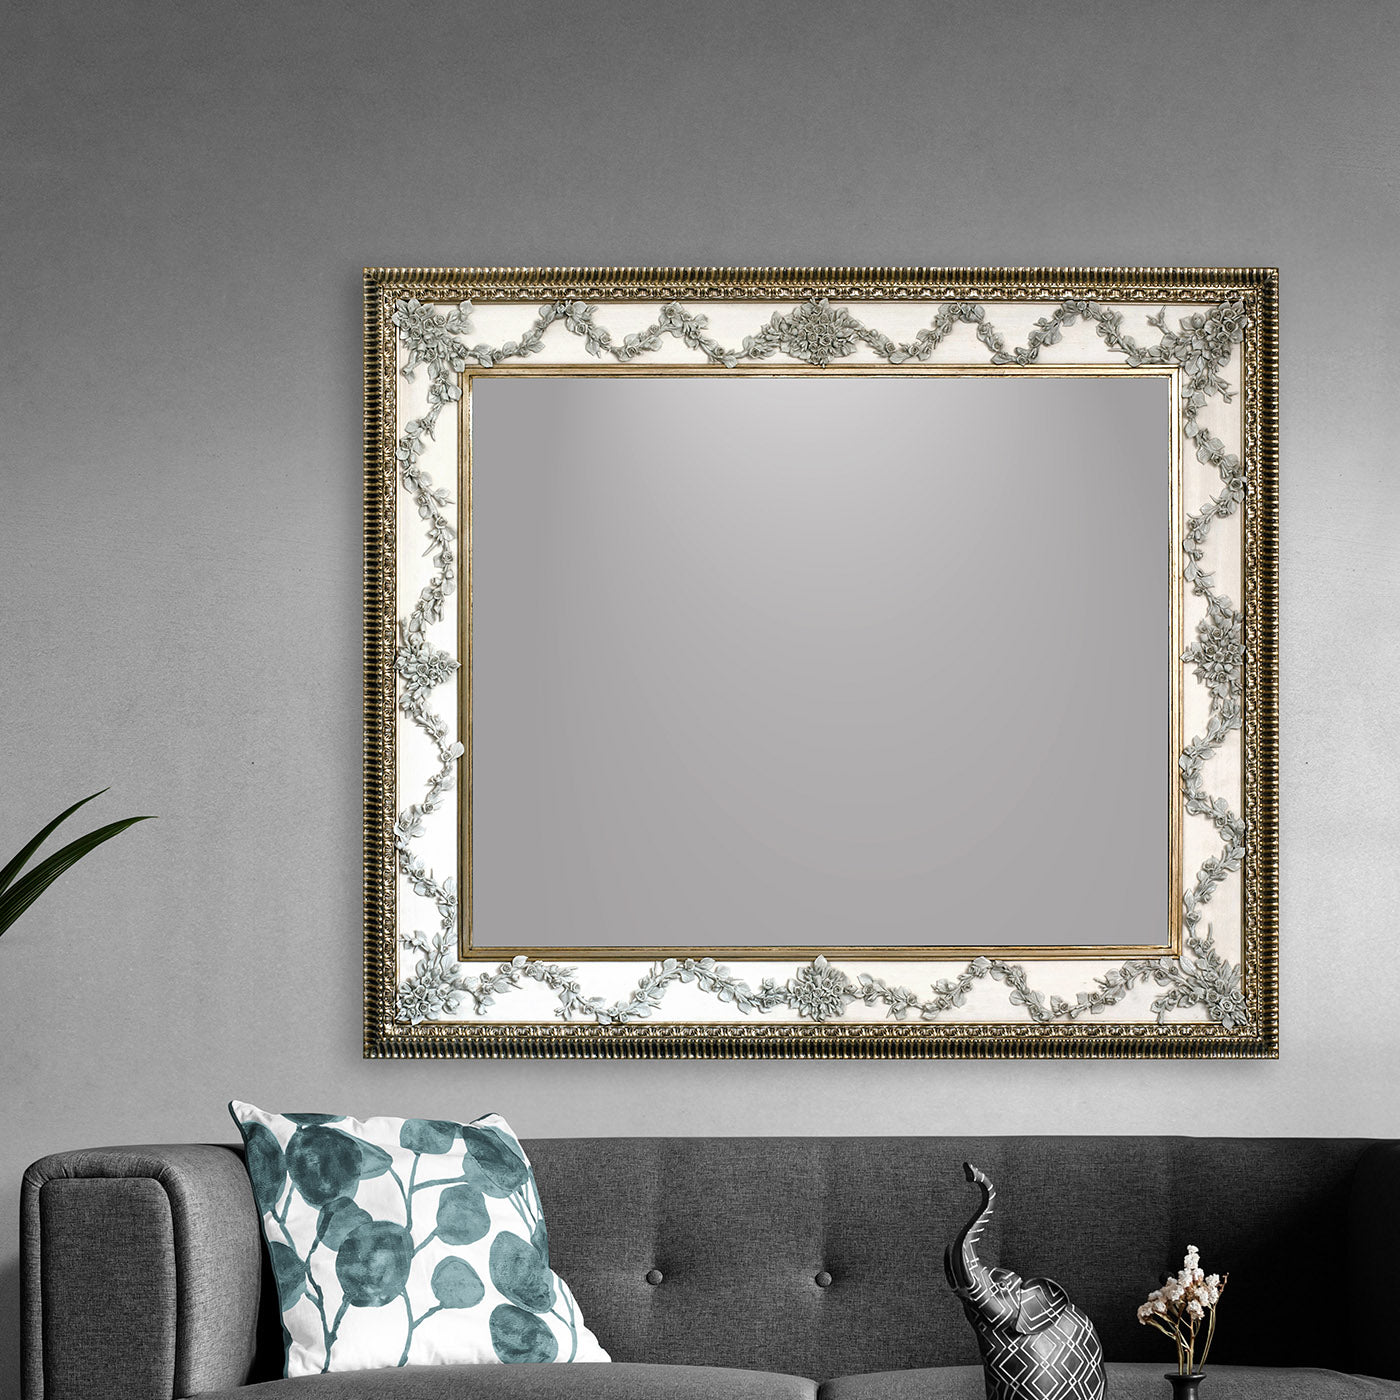 Rosetta Frame Mirror by Studio Caiafa - Alternative view 3